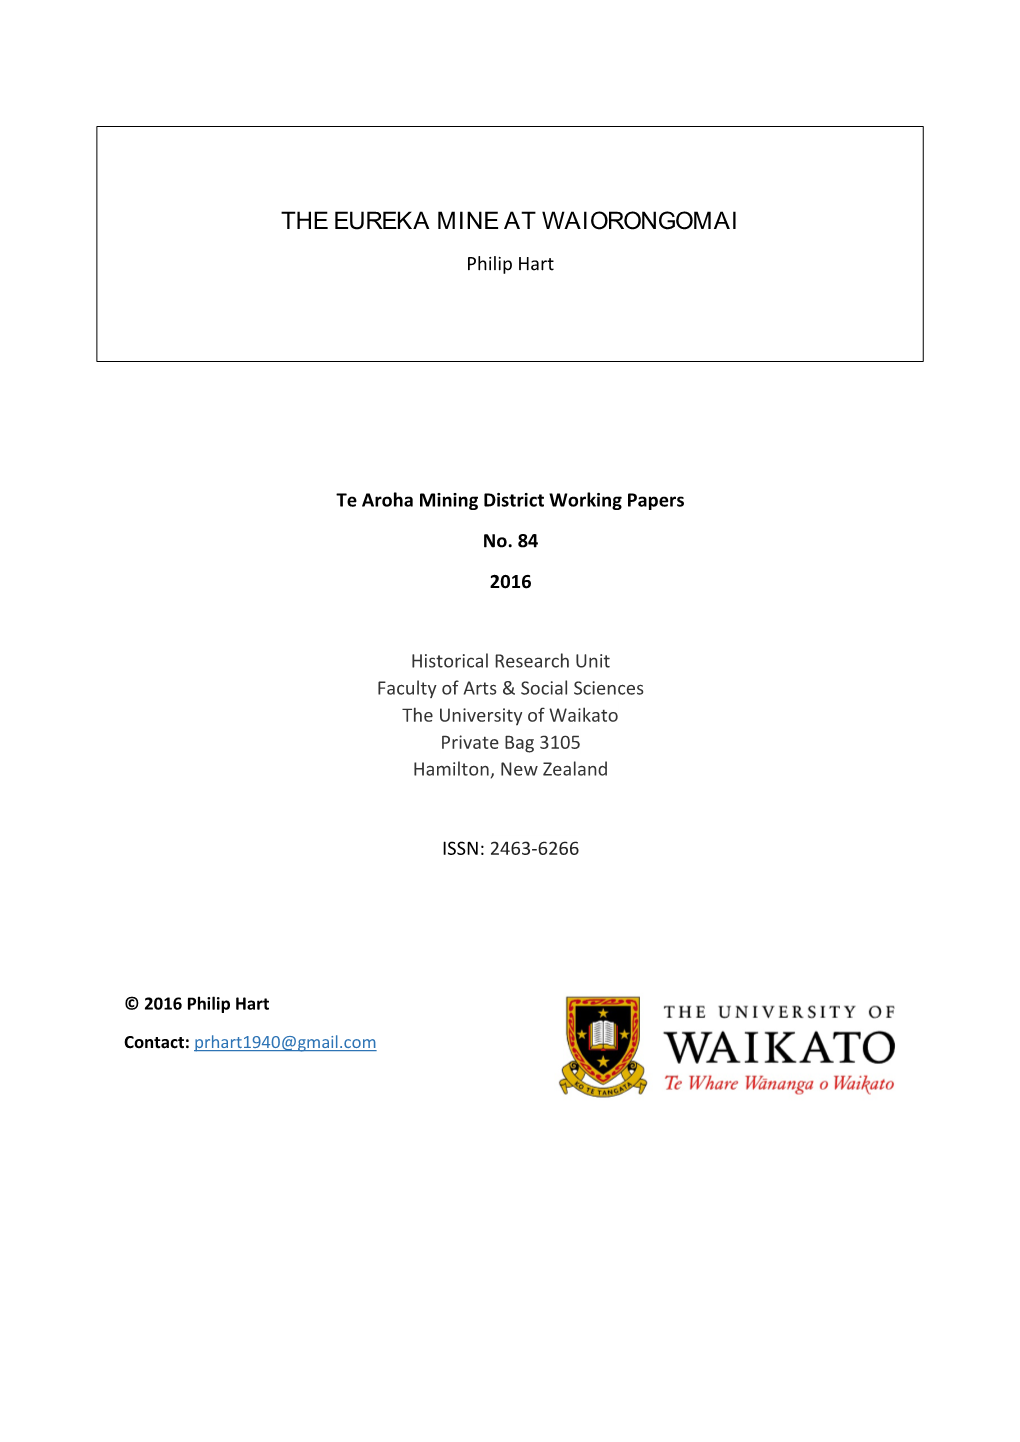 THE EUREKA MINE at WAIORONGOMAI Philip Hart